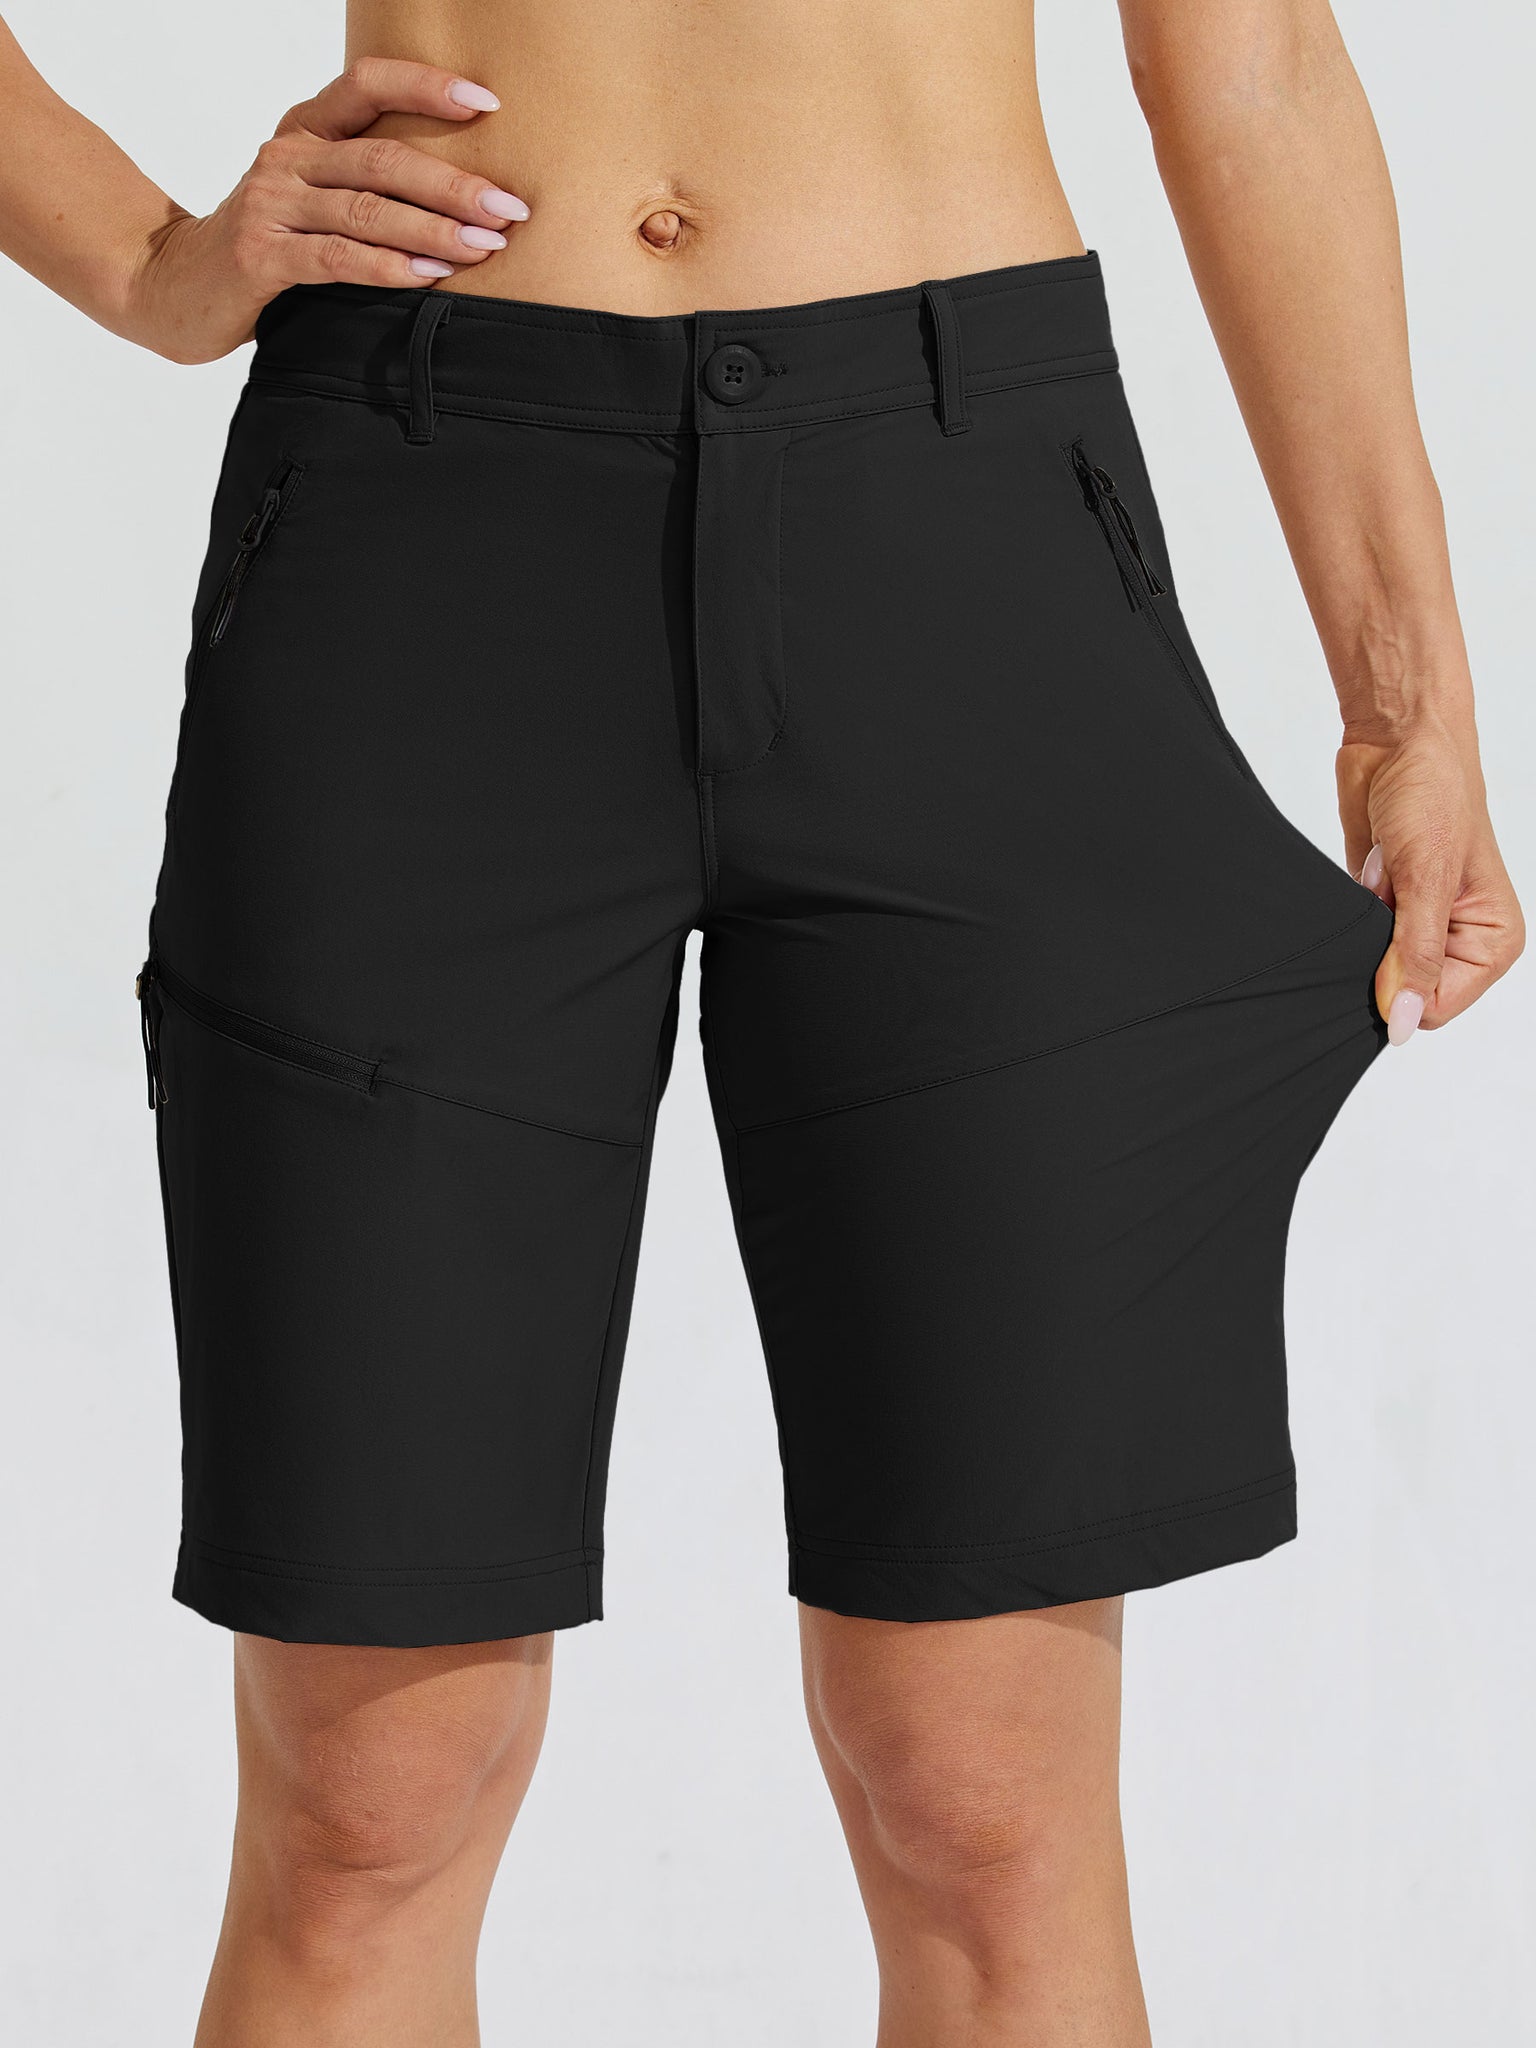 Women's Slim Leg Golf Shorts 10Inch_Black_model3